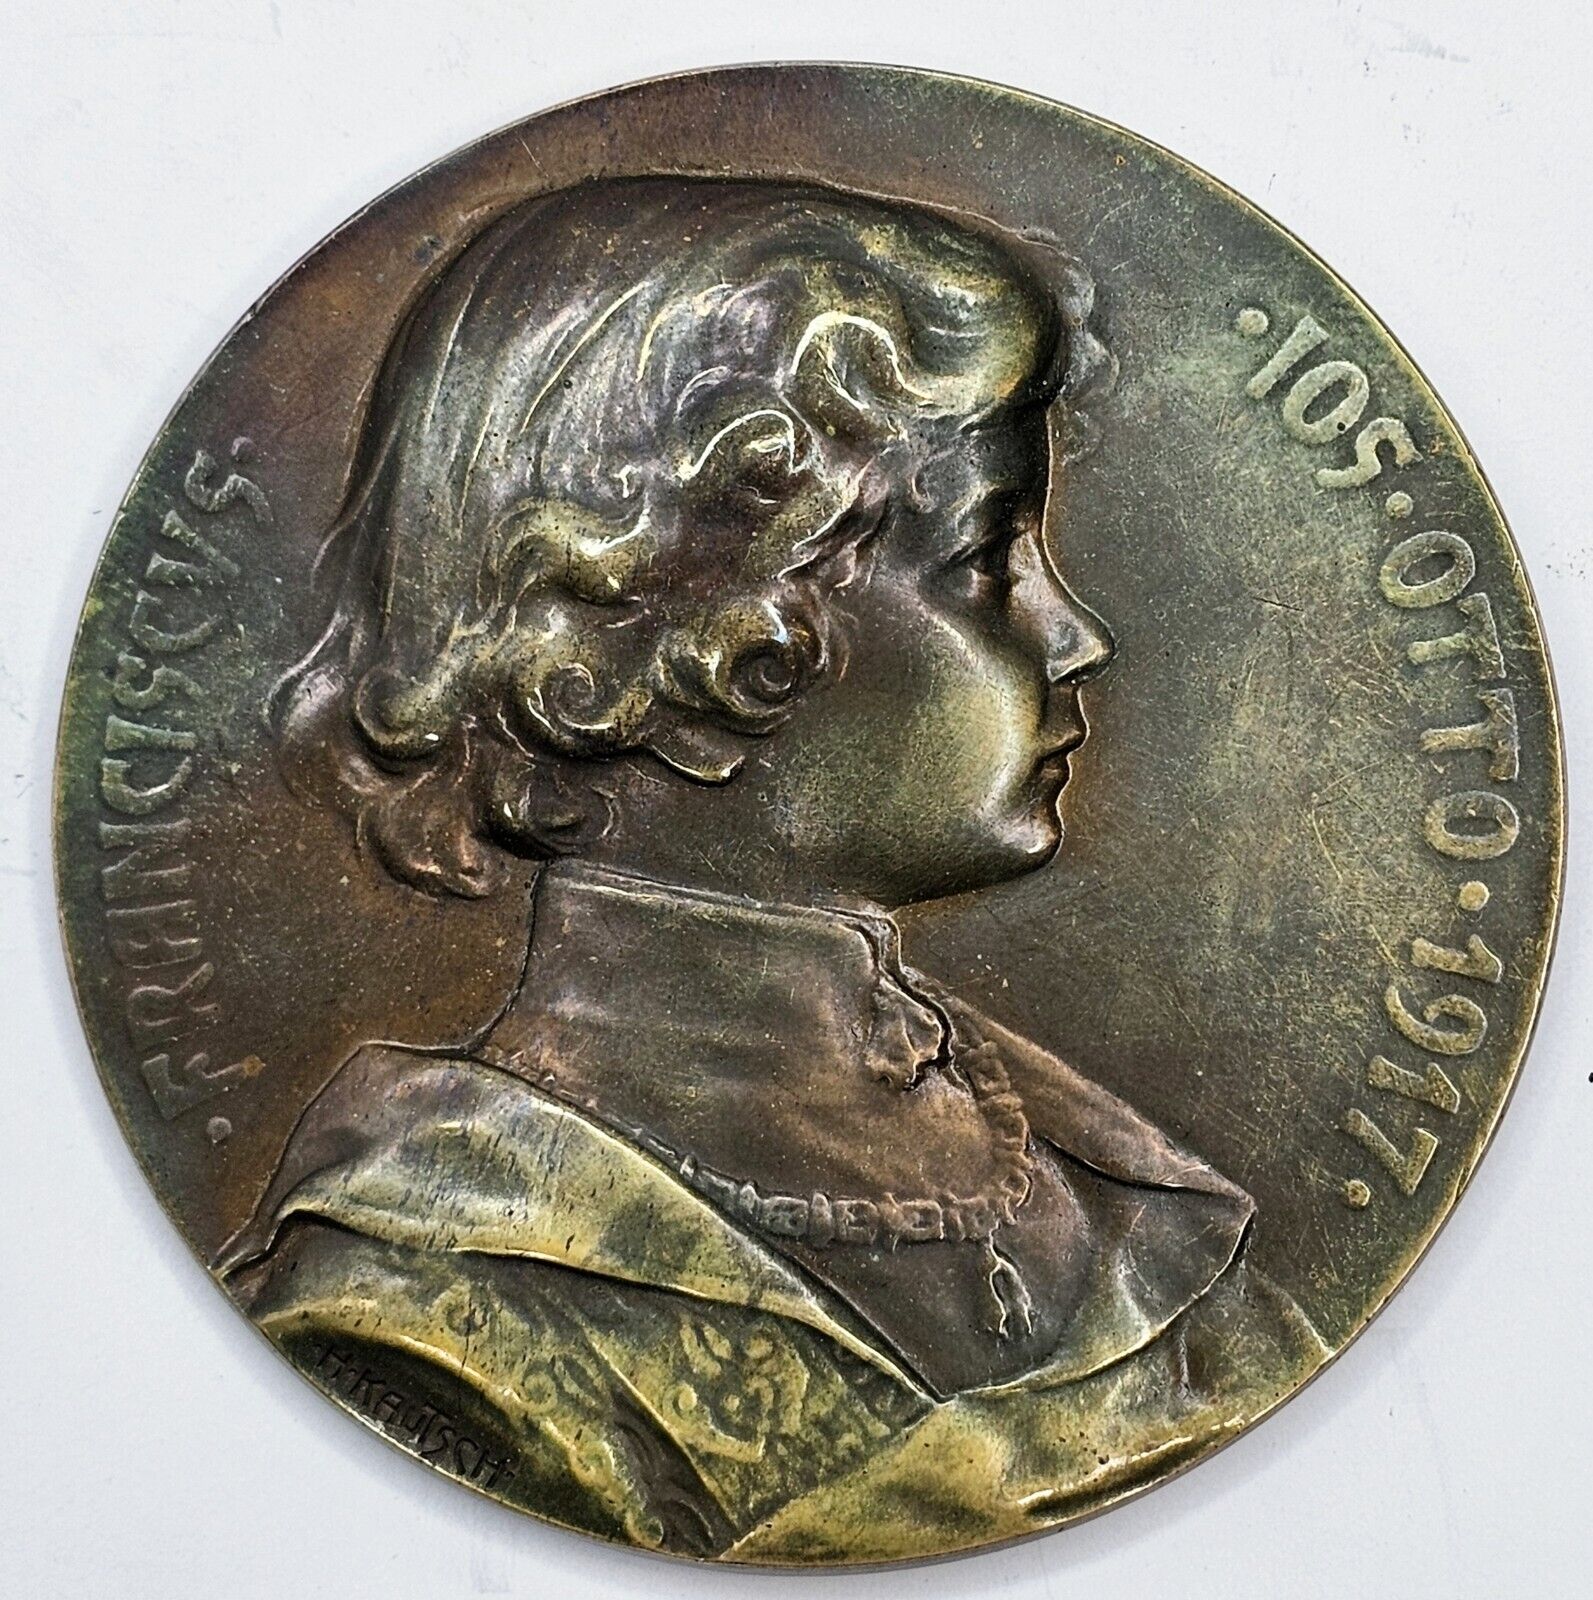 Antique Austria - Hungary Award Coin By H.Kautsch - 1917 - WWI Period - Bronze